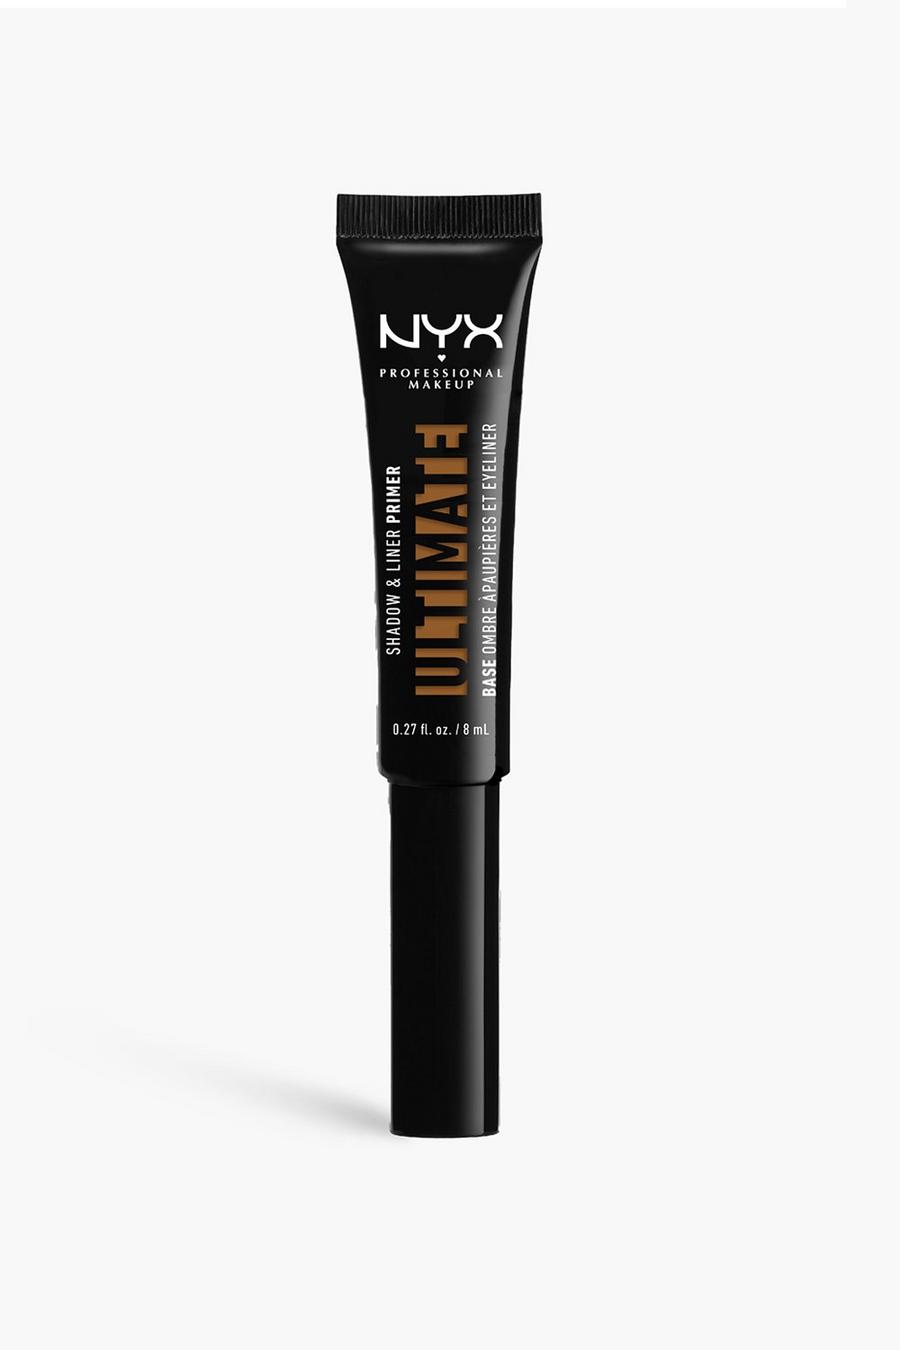 NYX Professional Makeup Primer viso e occhi infuso alla vitamina E Ultimate Shadow and Liner Primer, 04 deep